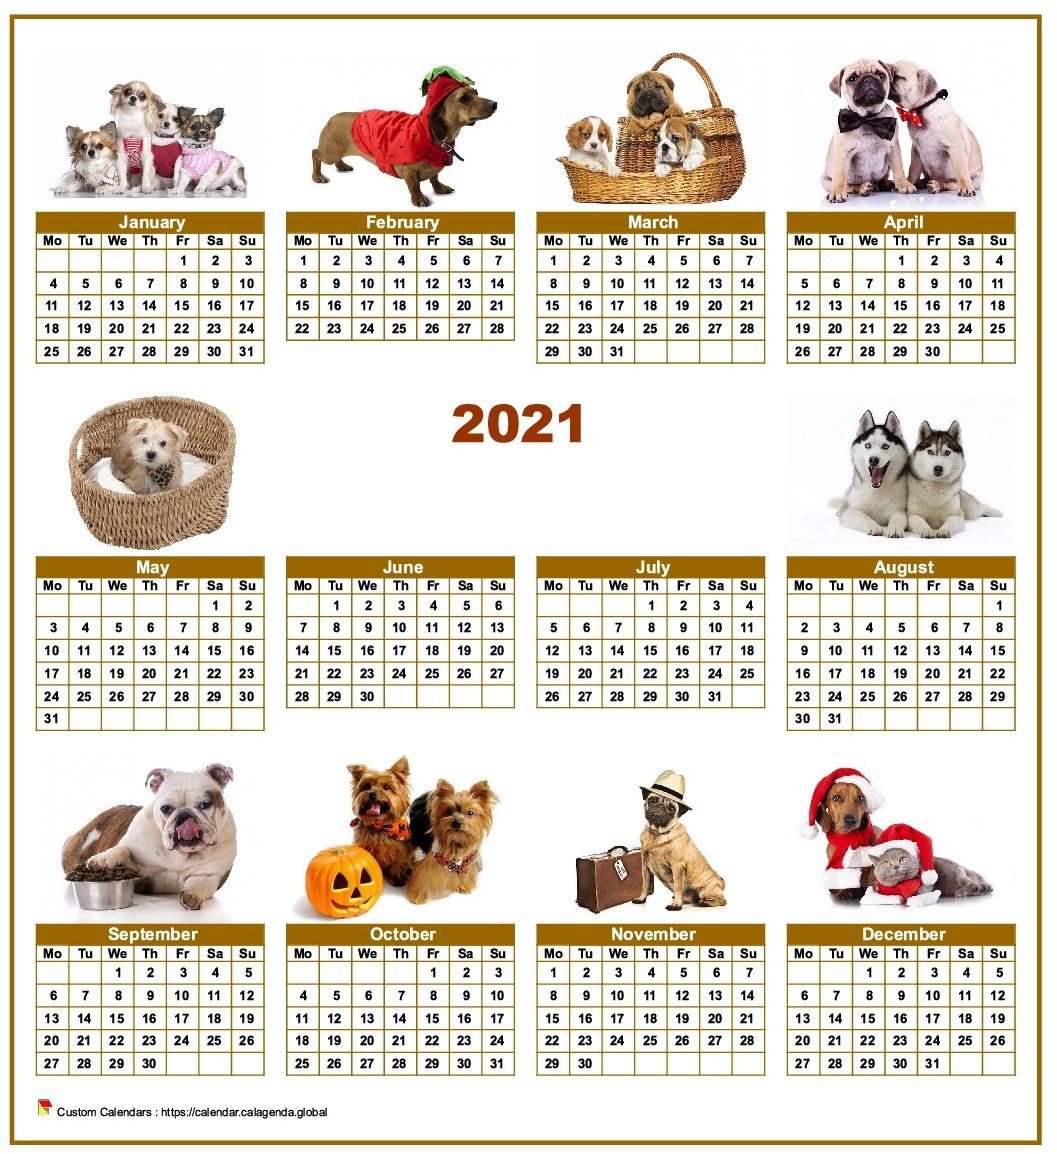 Calendar 2021 annual special 'dogs ' with 10 photos